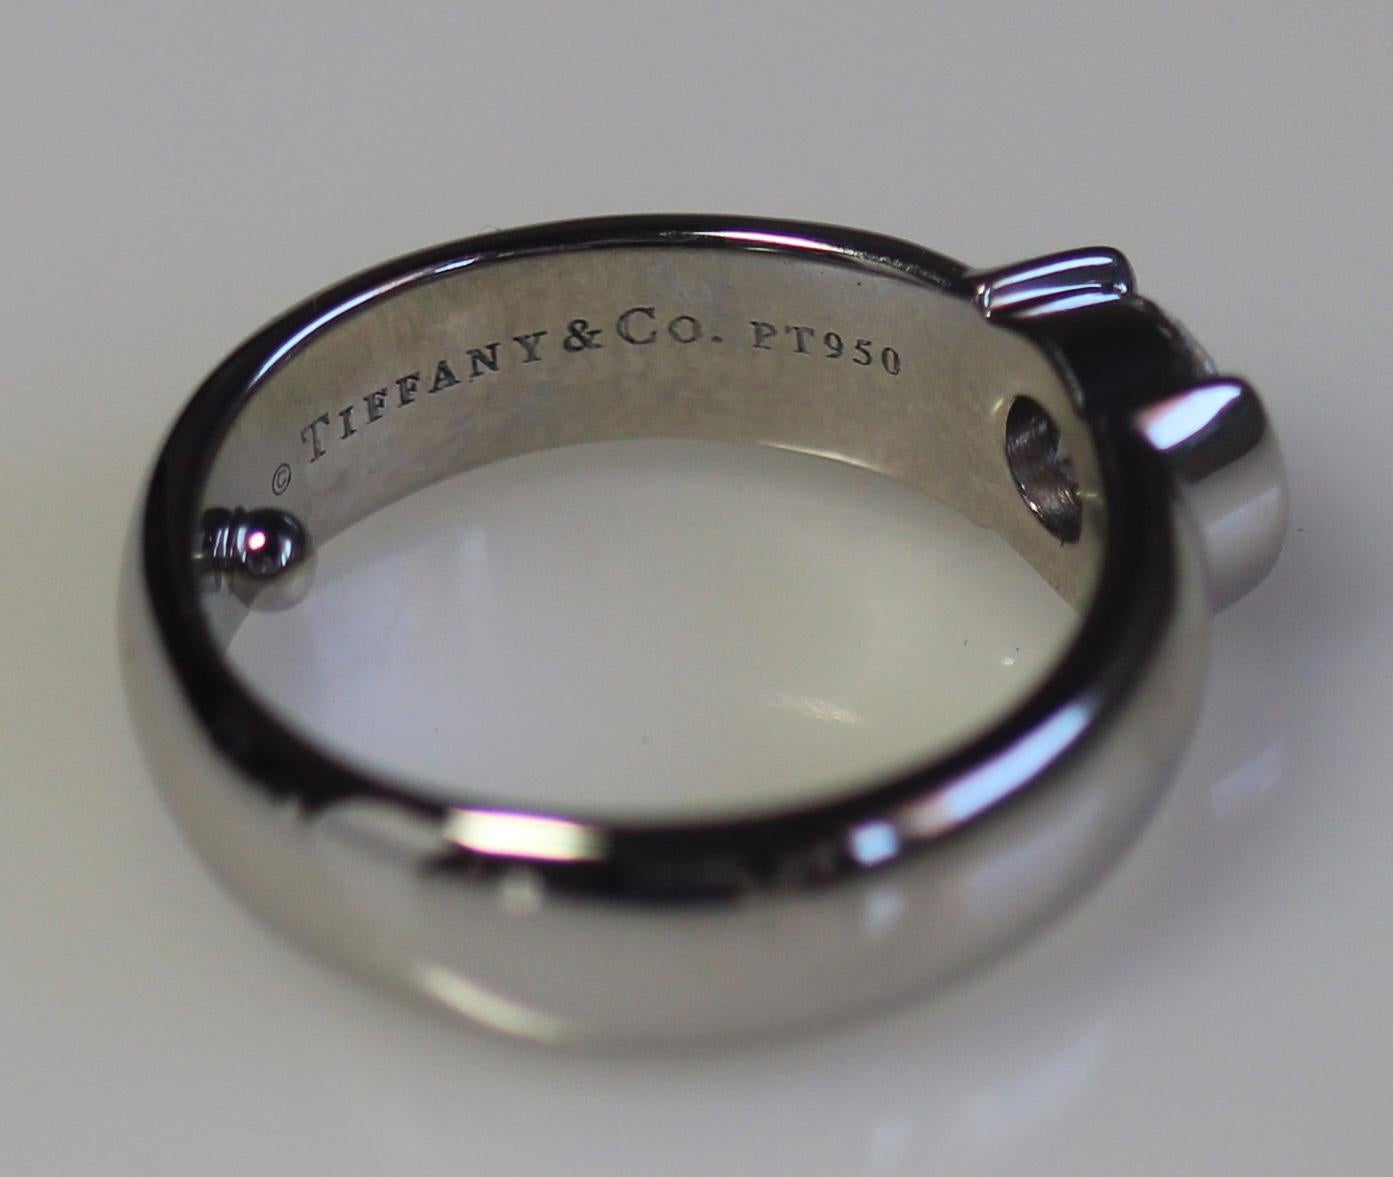 Tiffany & Co. Etoile Platinum 0.81 Carat Round F VVS2 Diamond Engagement Ring For Sale 1